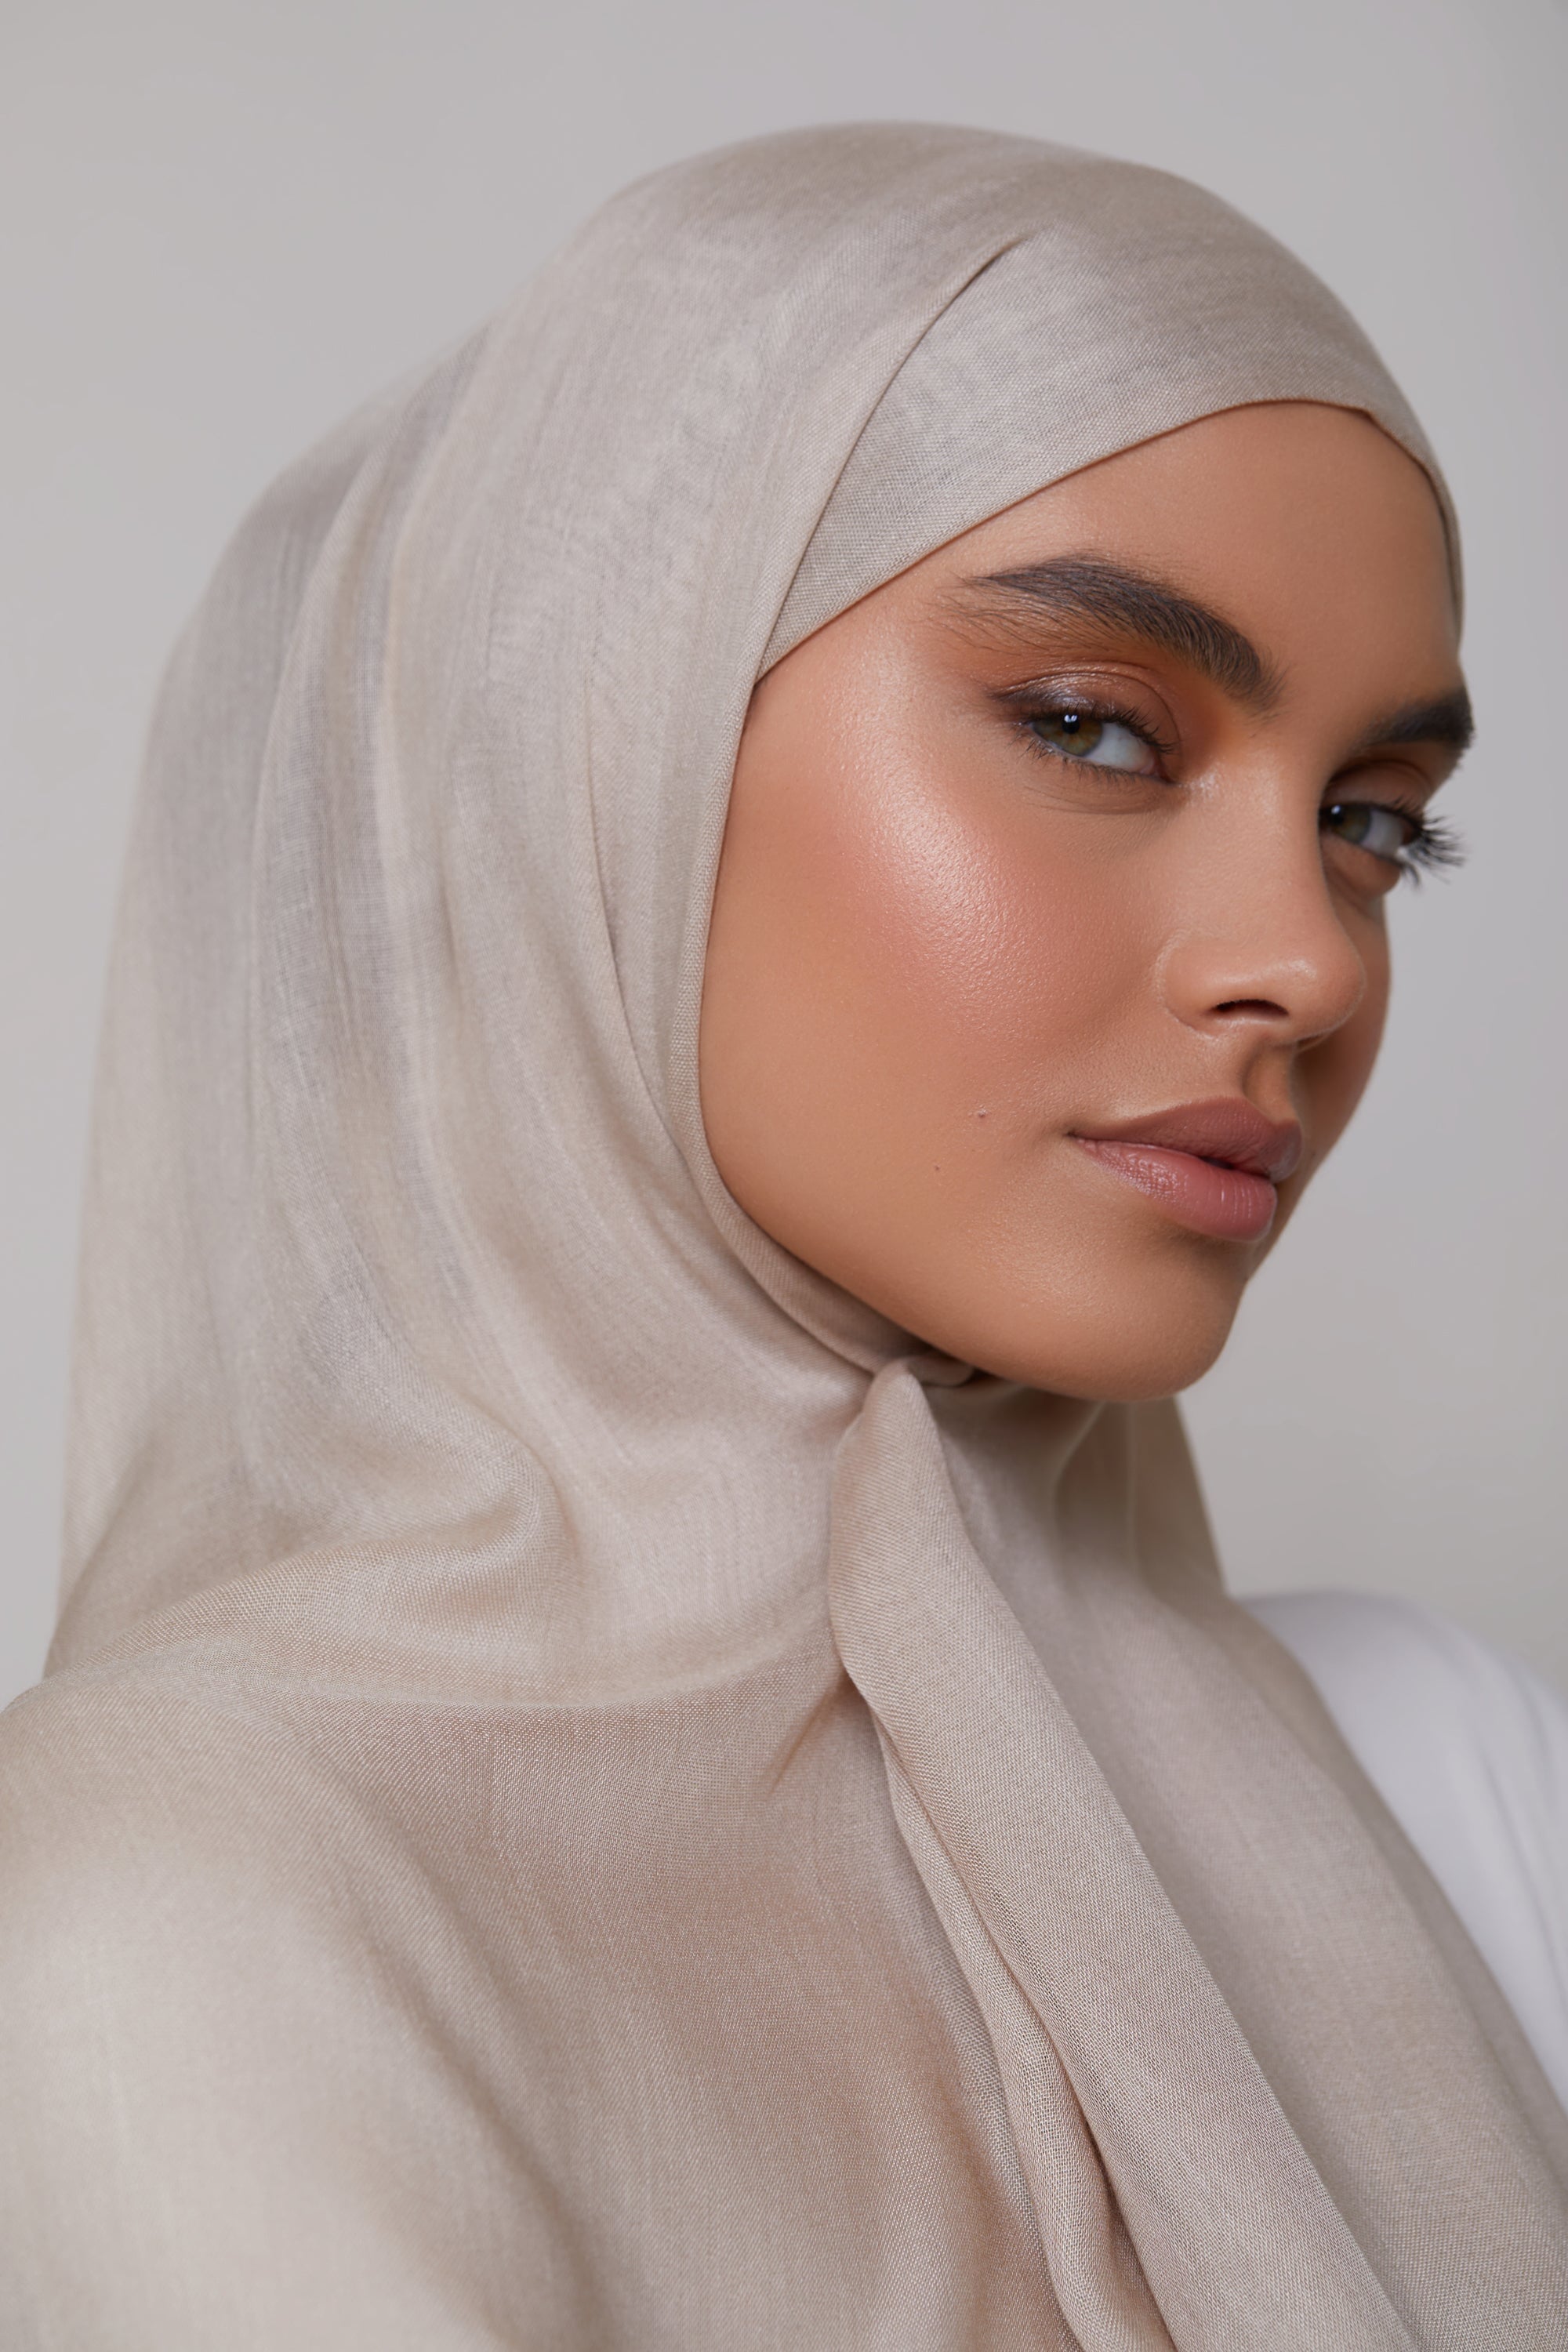 Modal Hijab - Light Sand epschoolboard 